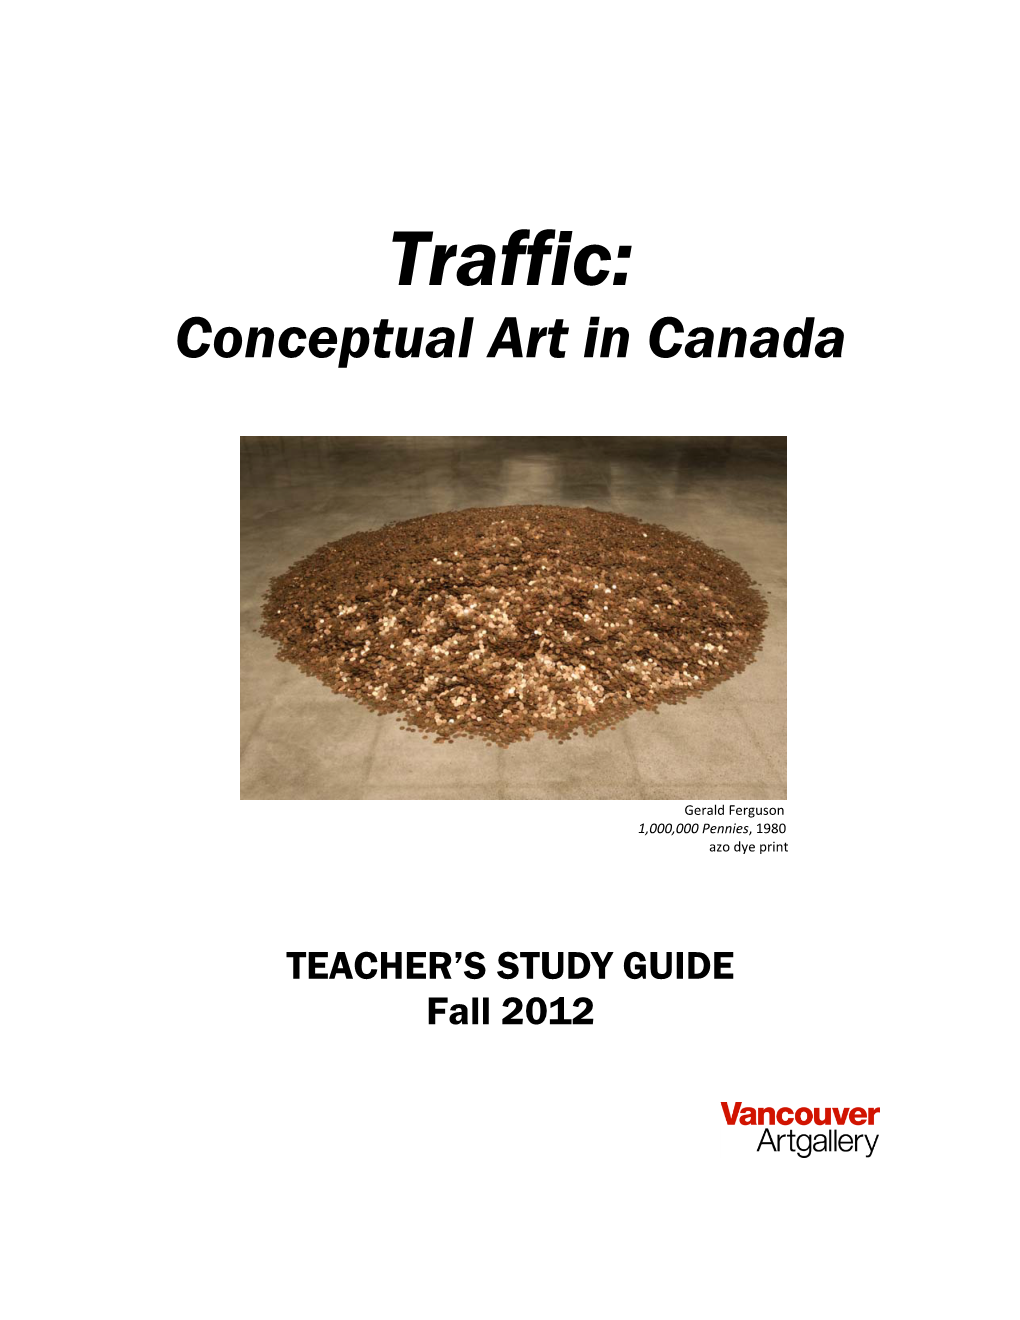 Traffic: Conceptual Art in Canada